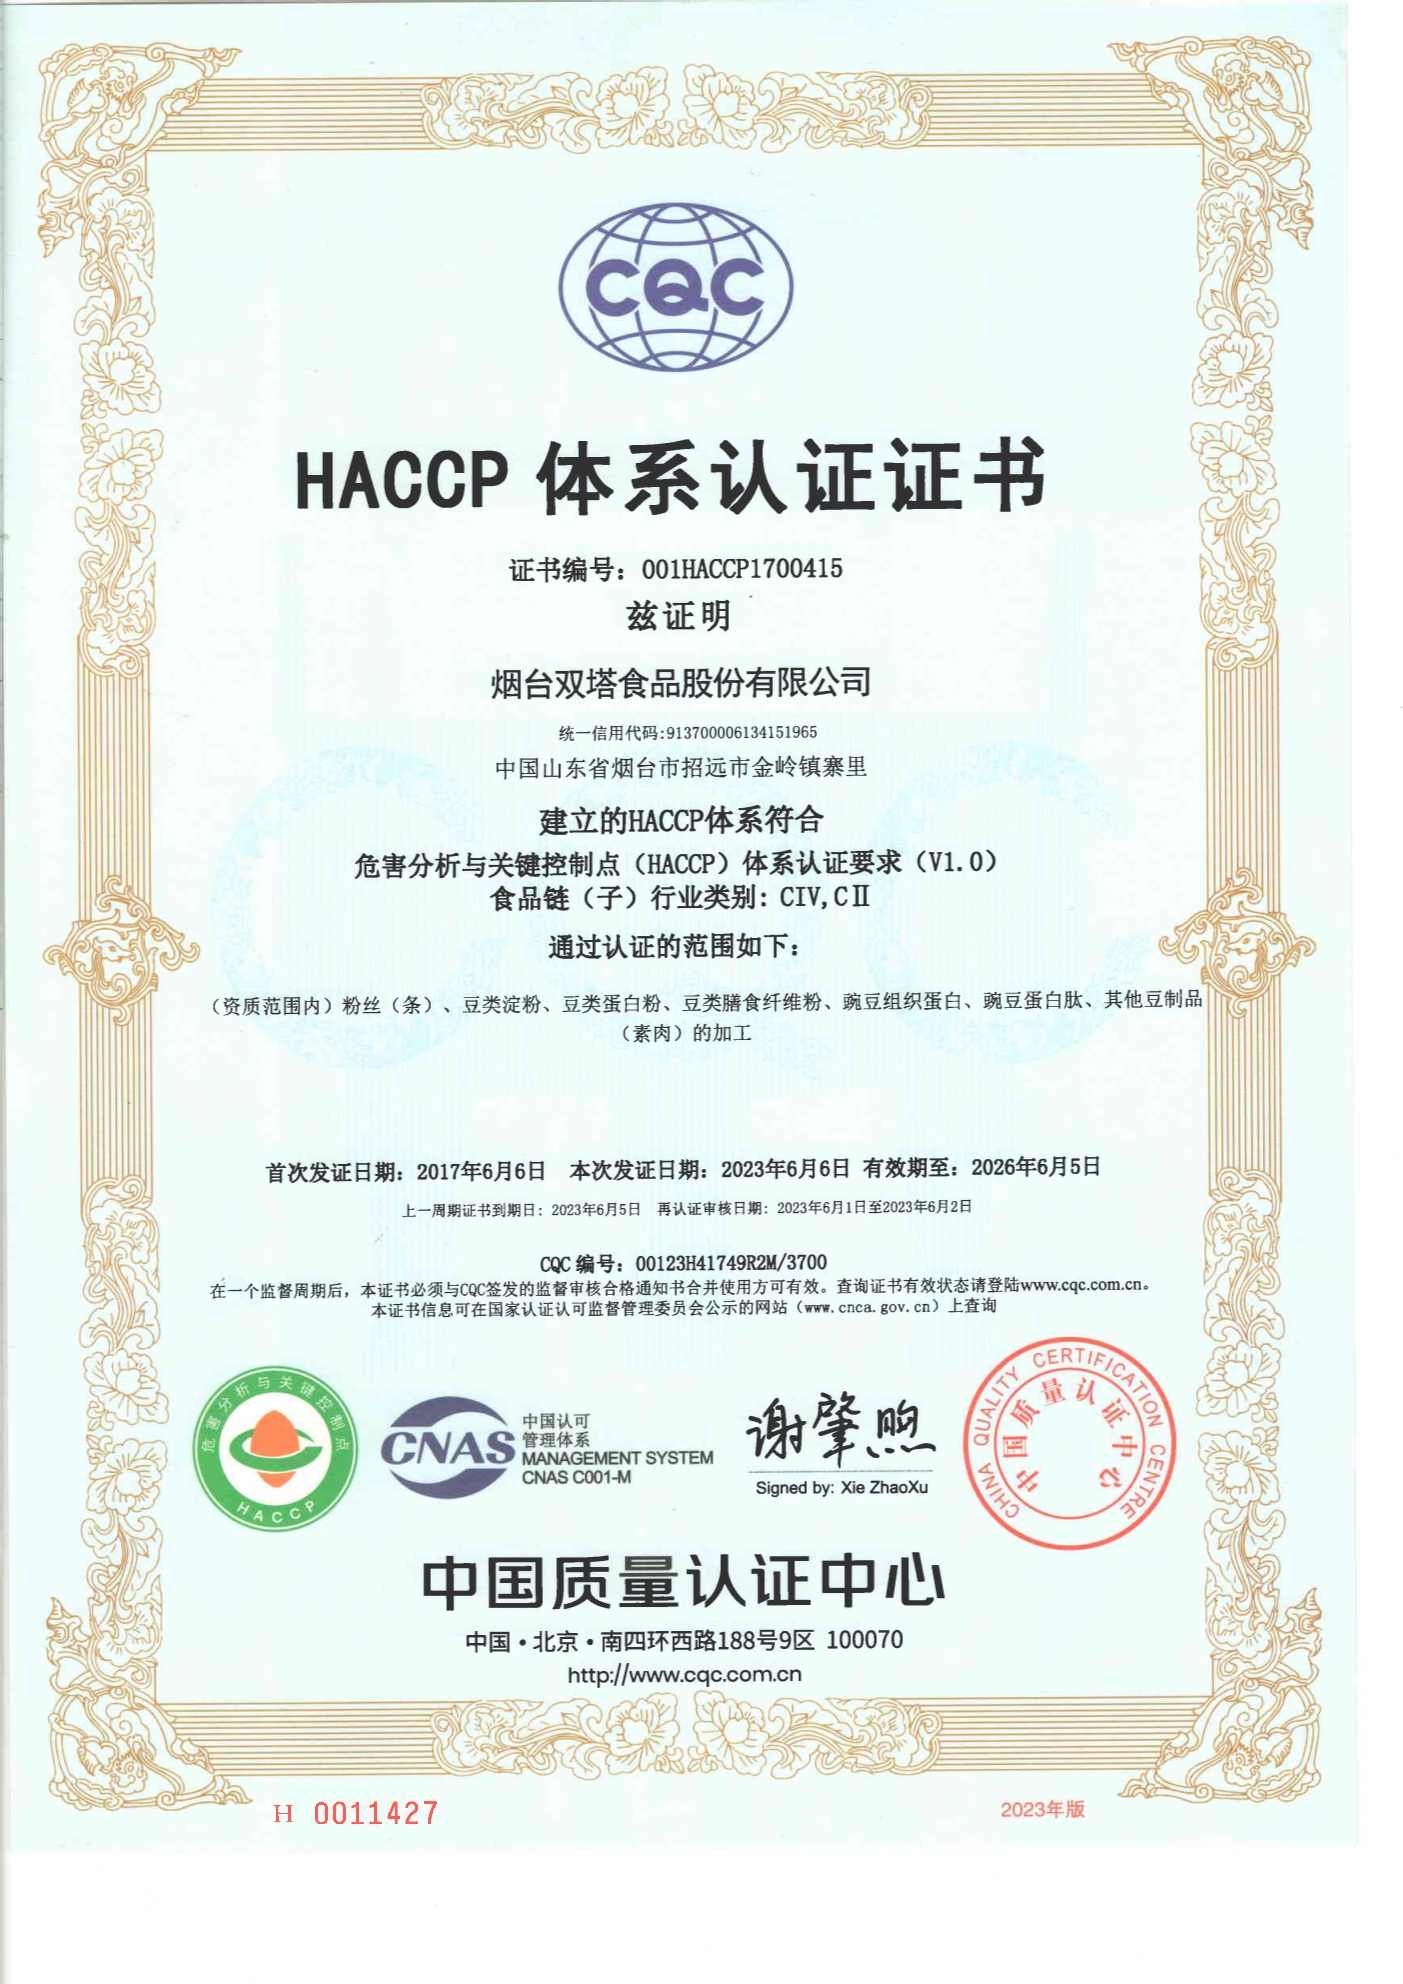 HACPP認證